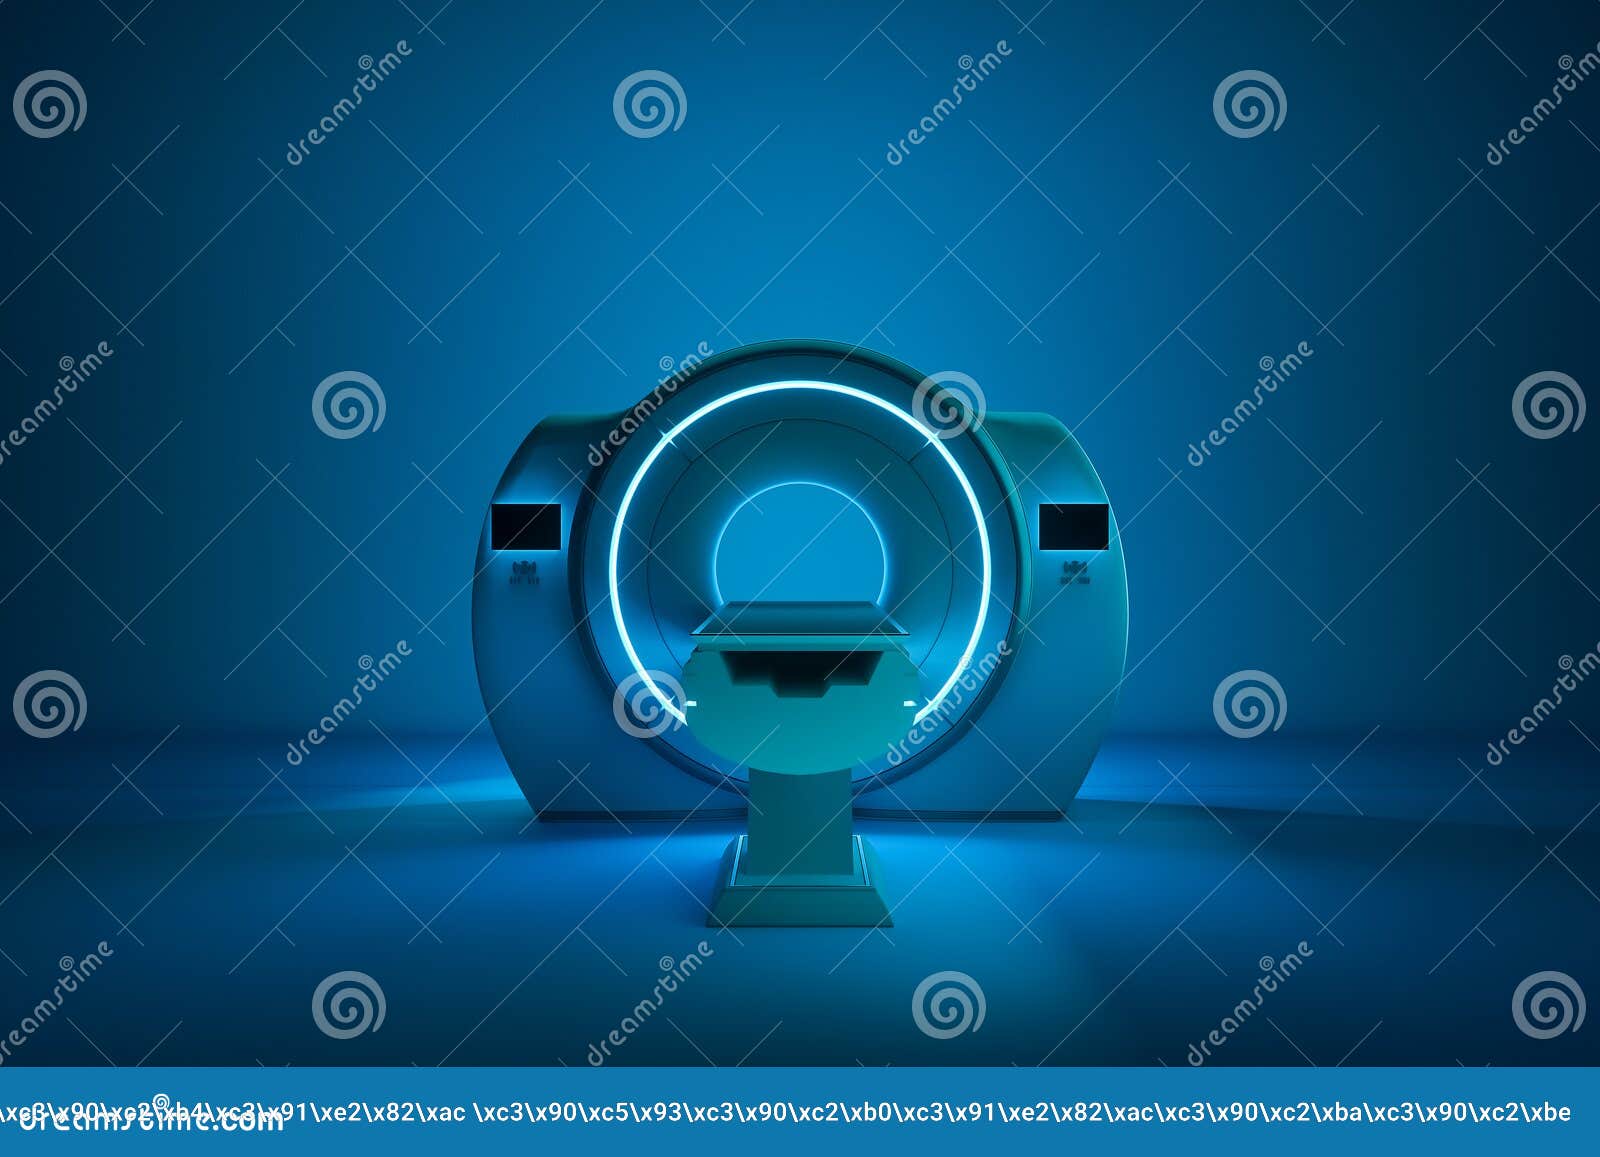 mri machine, magnetic resonance imaging machine on a dark blue background. concept medicine, technology, future. 3d rendering, 3d